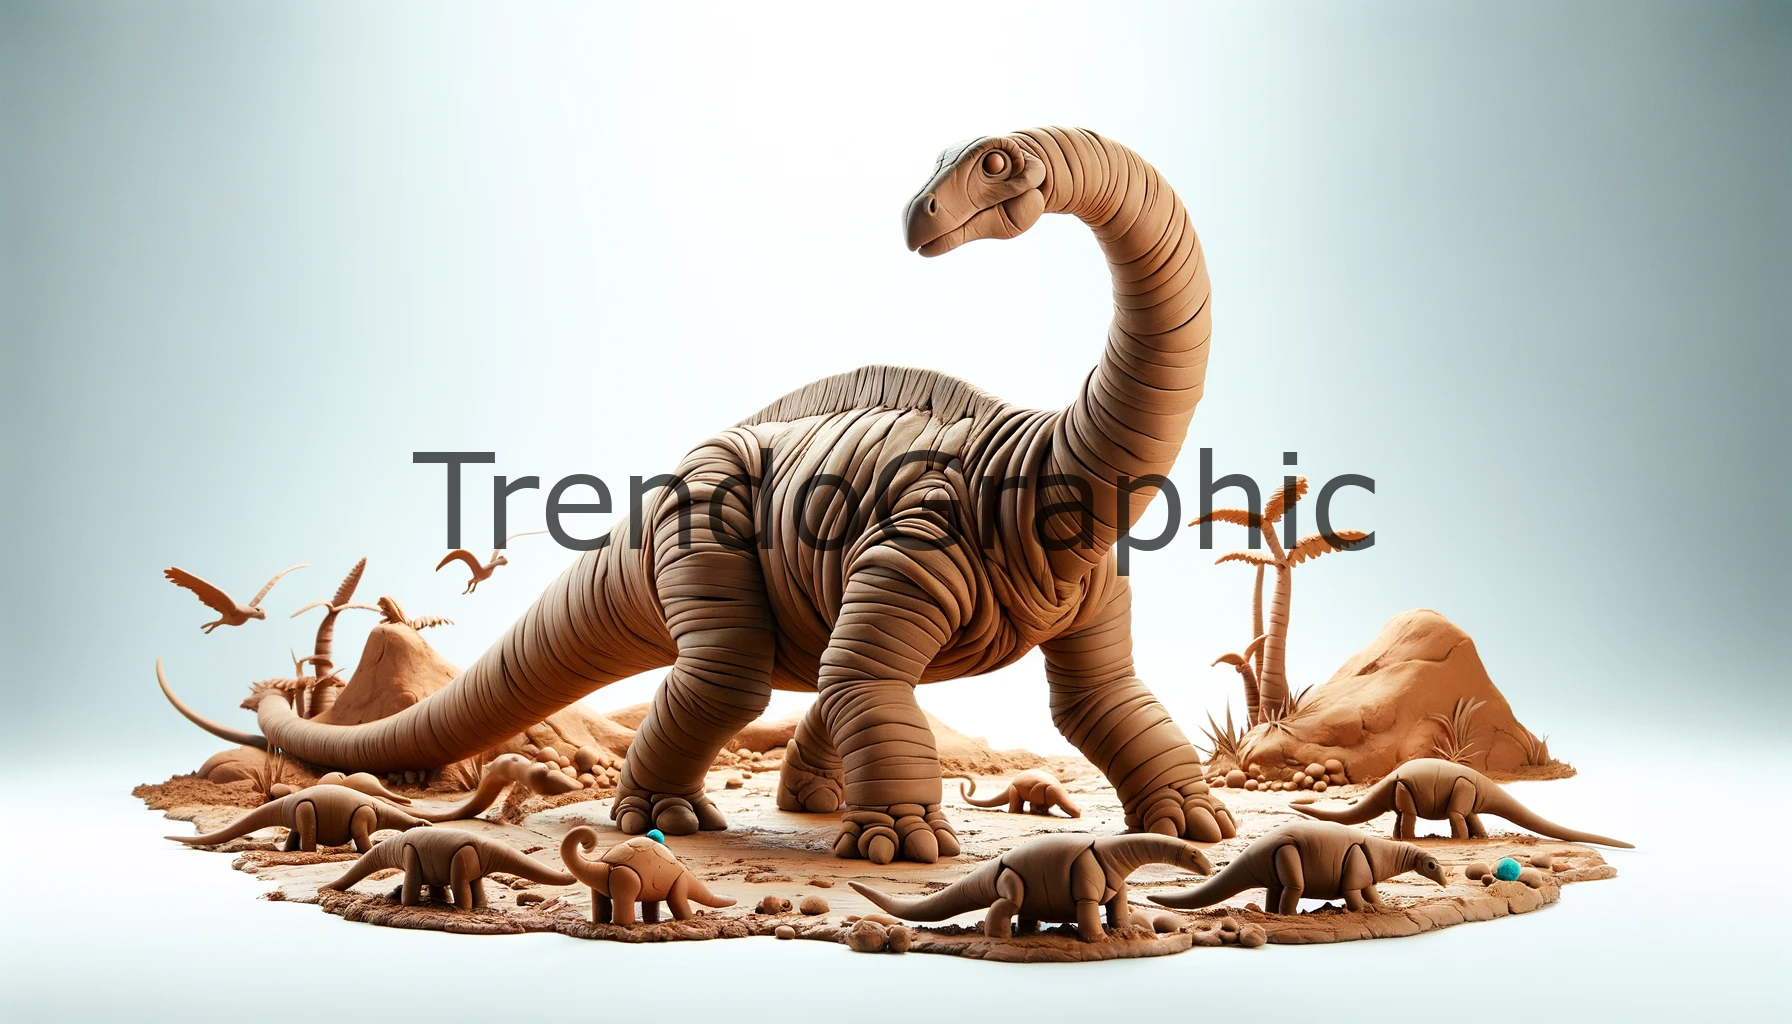 Brachiosaurus: A Lifelike Claymation Marvel